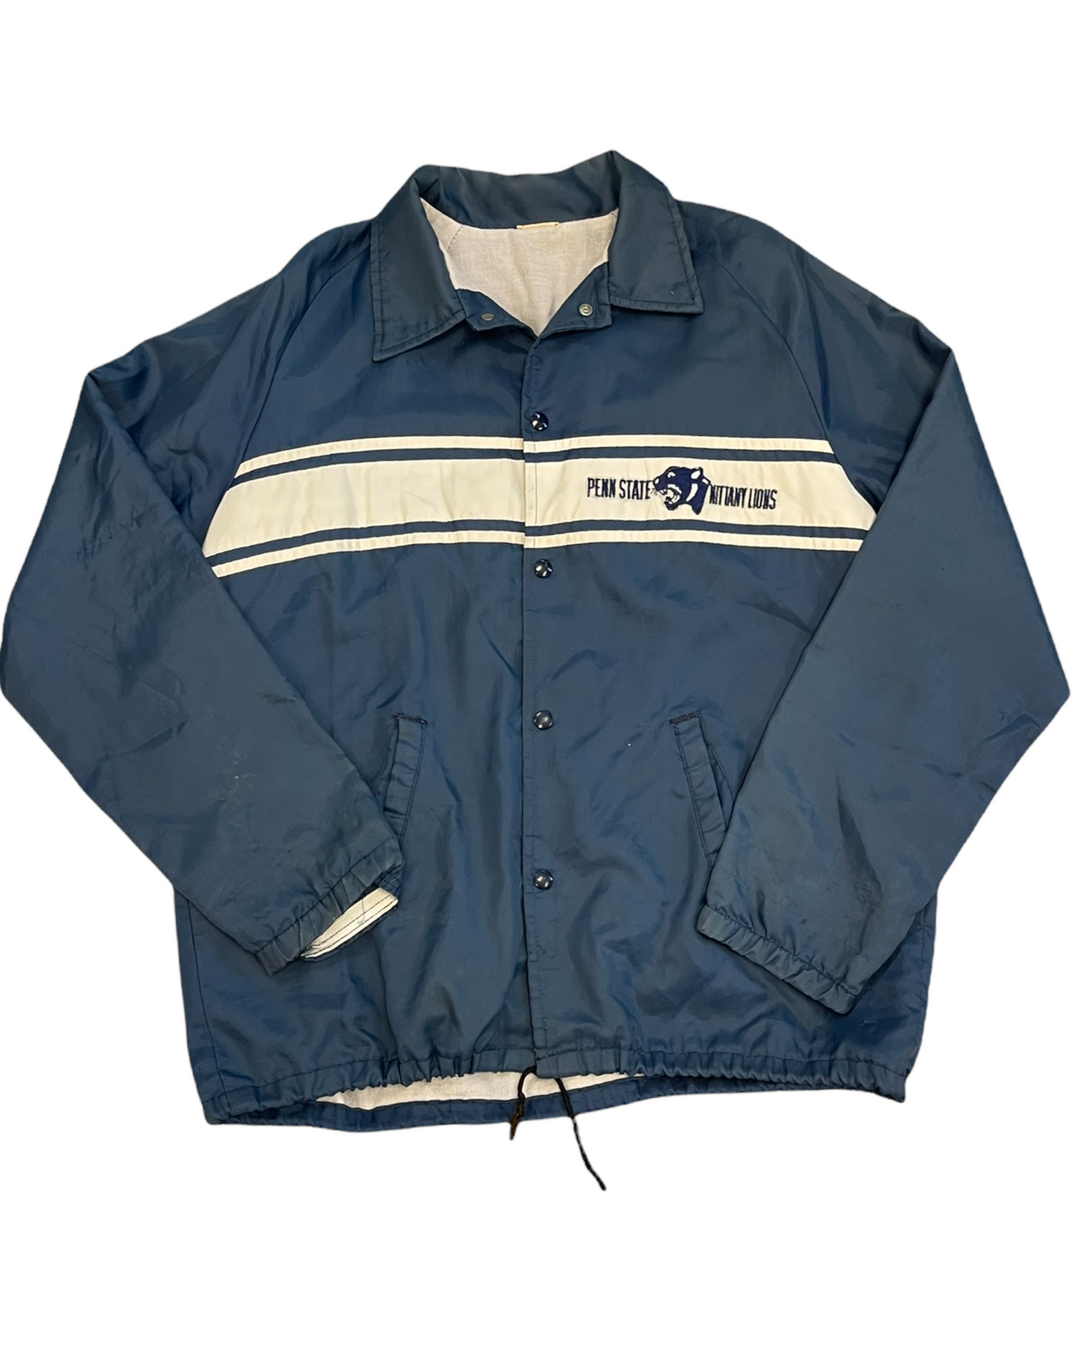 Penn State Vintage Light Weight Bomber Jacket